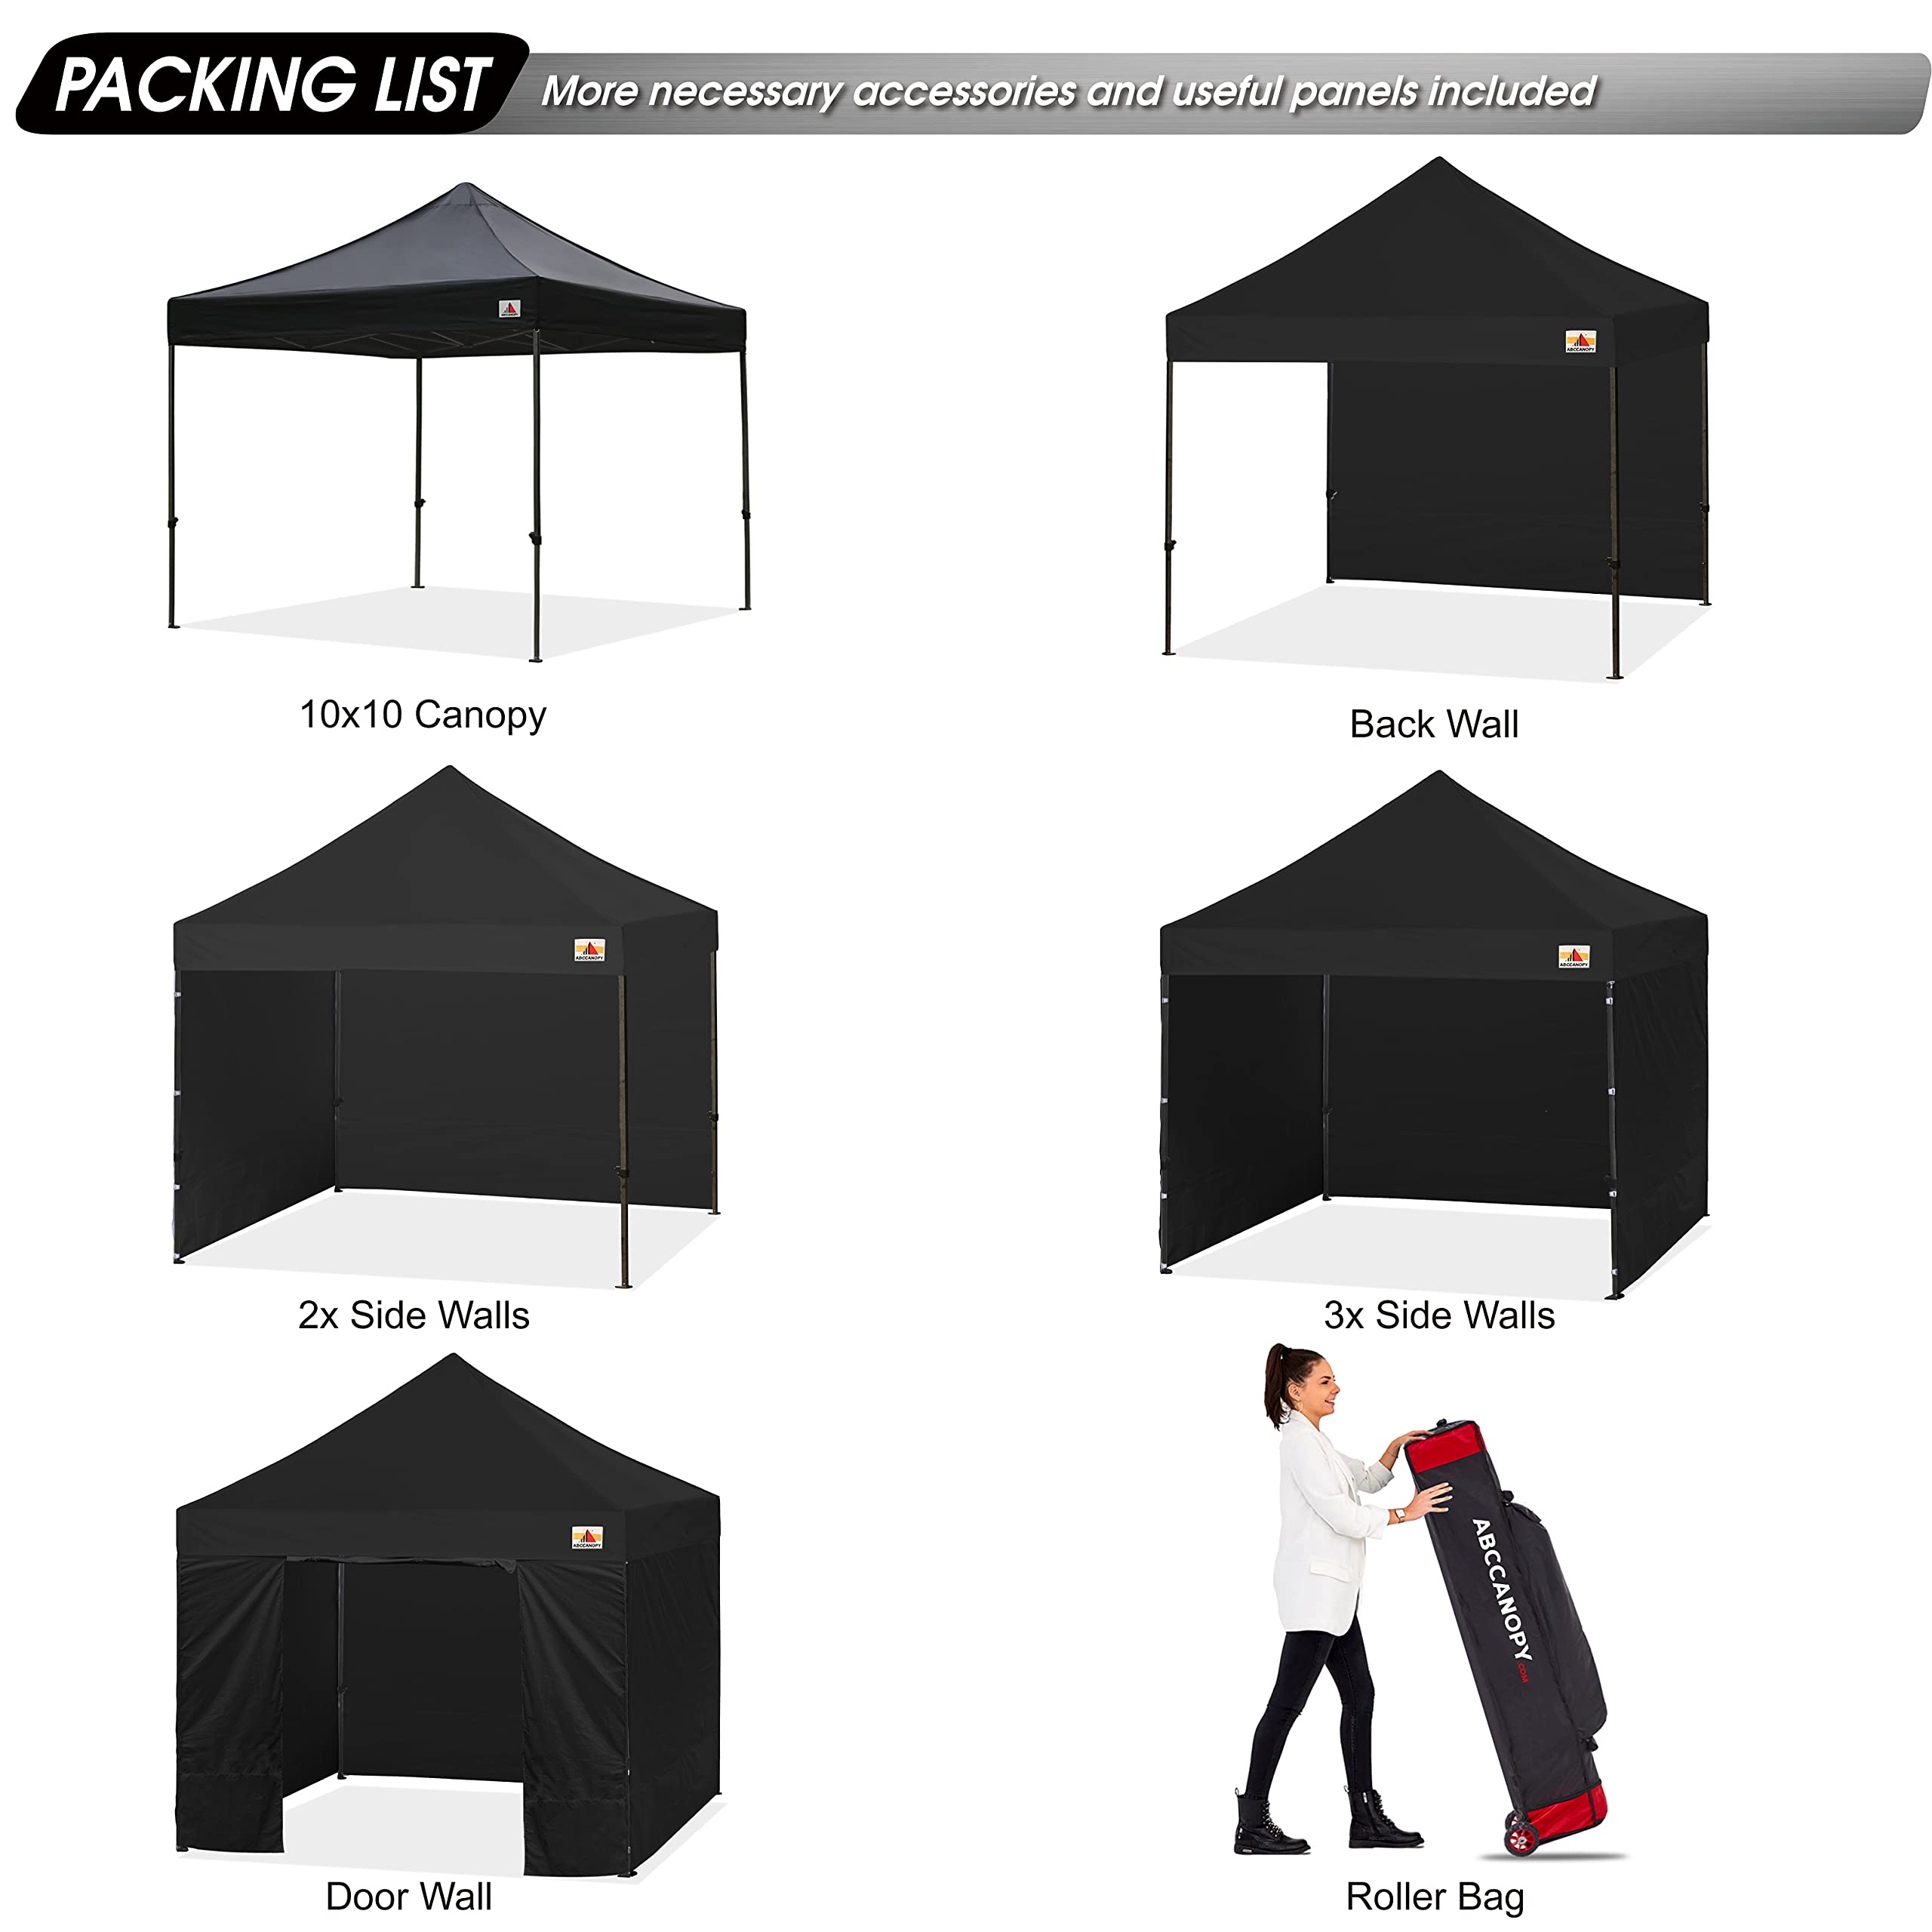 ABCCANOPY Heavy Duty Ez Pop up Canopy Tent with Sidewalls 10x10, Dull Black